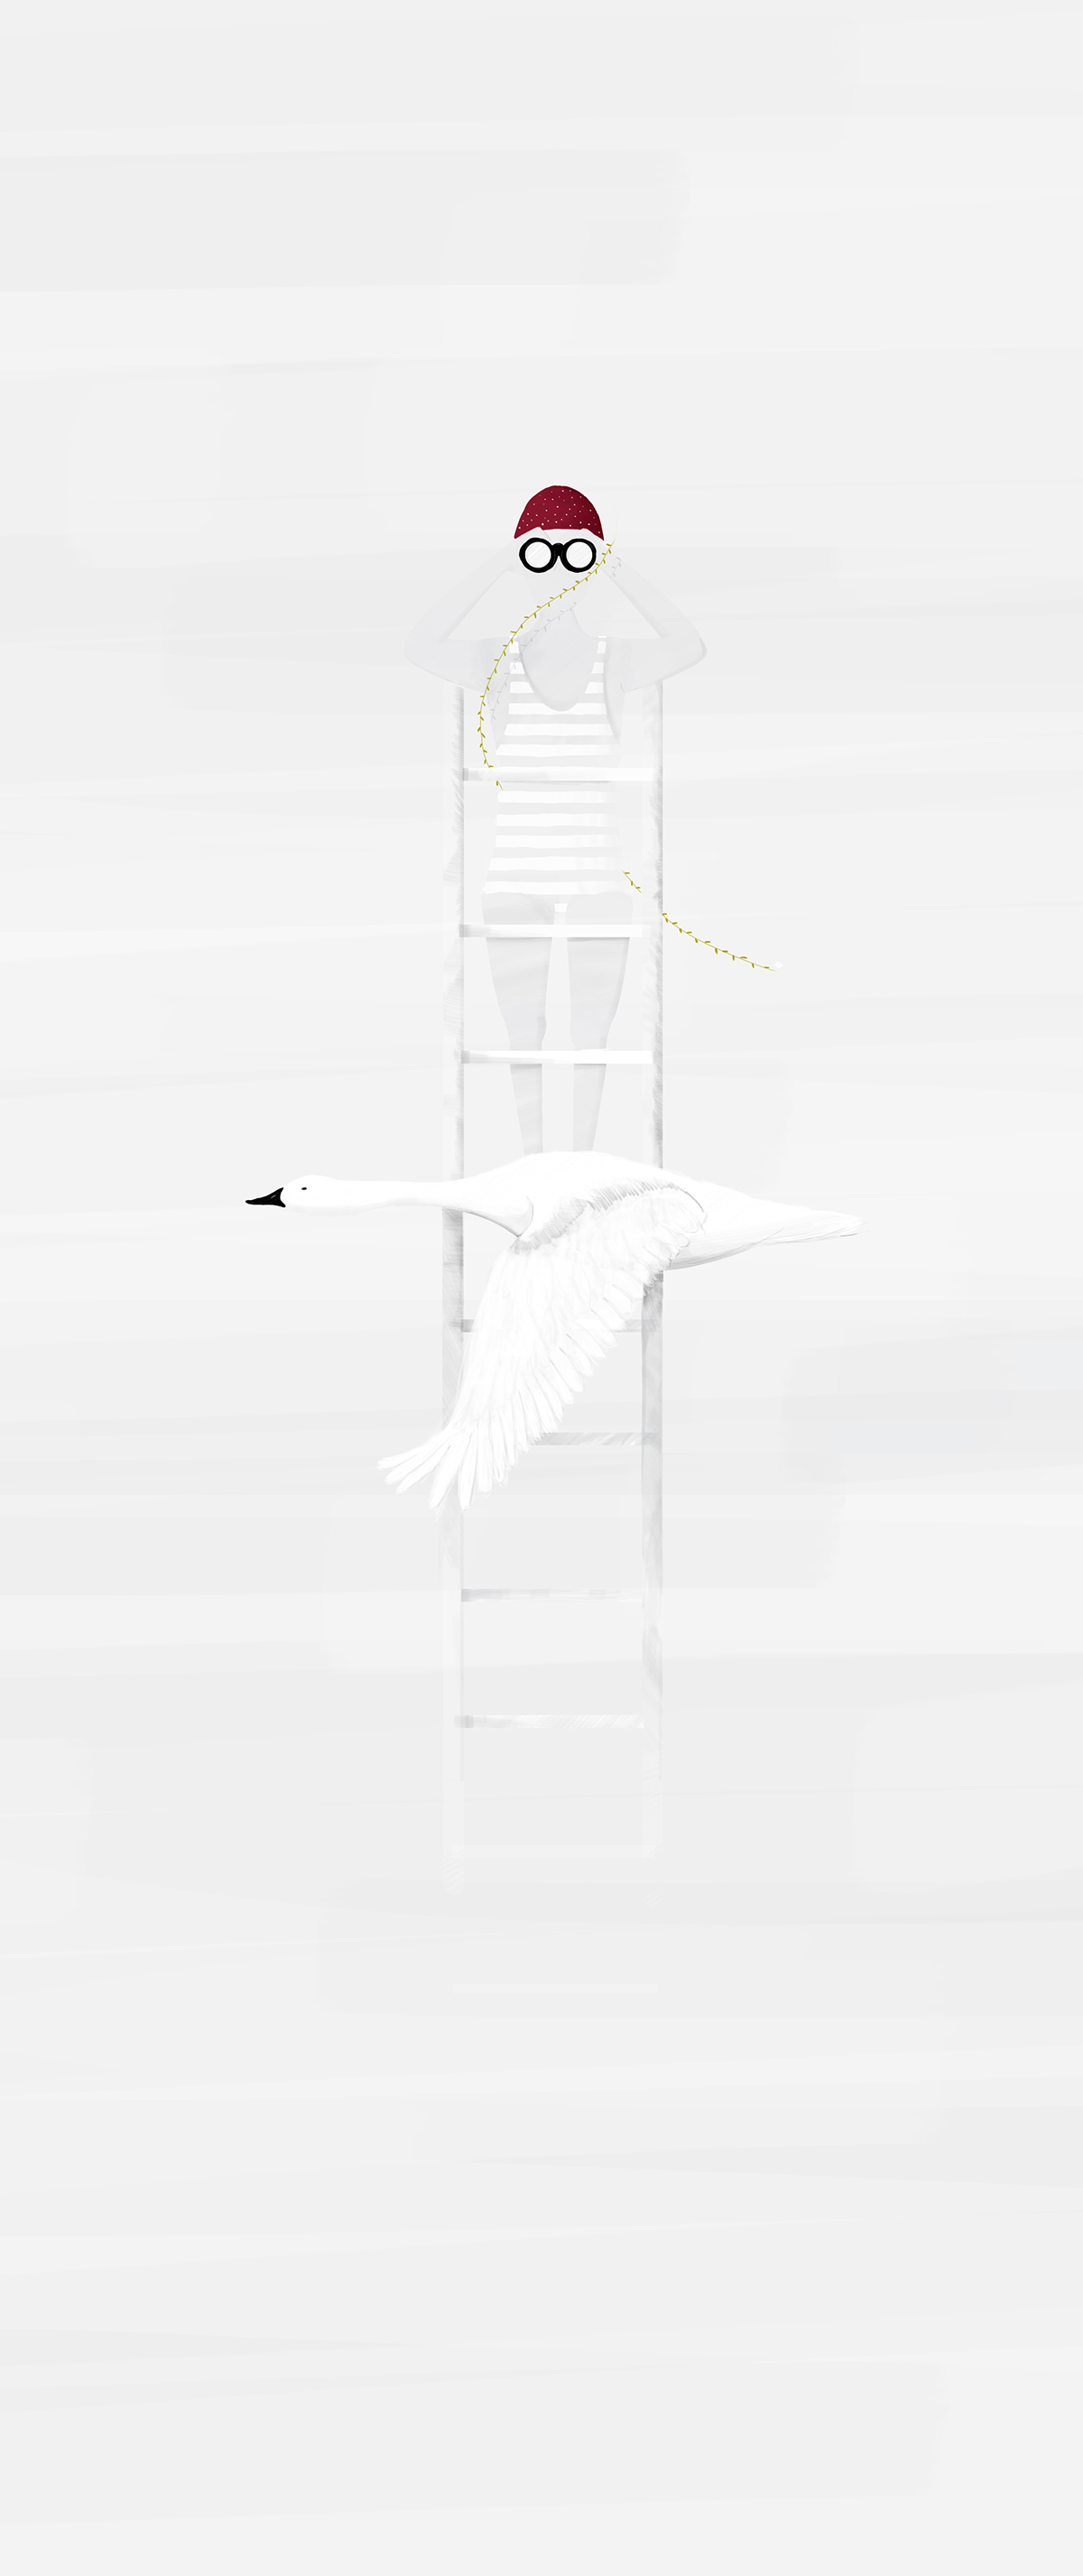 Scandinavia Nordic feelings Sweden White Canada Goose scale binocular ladder